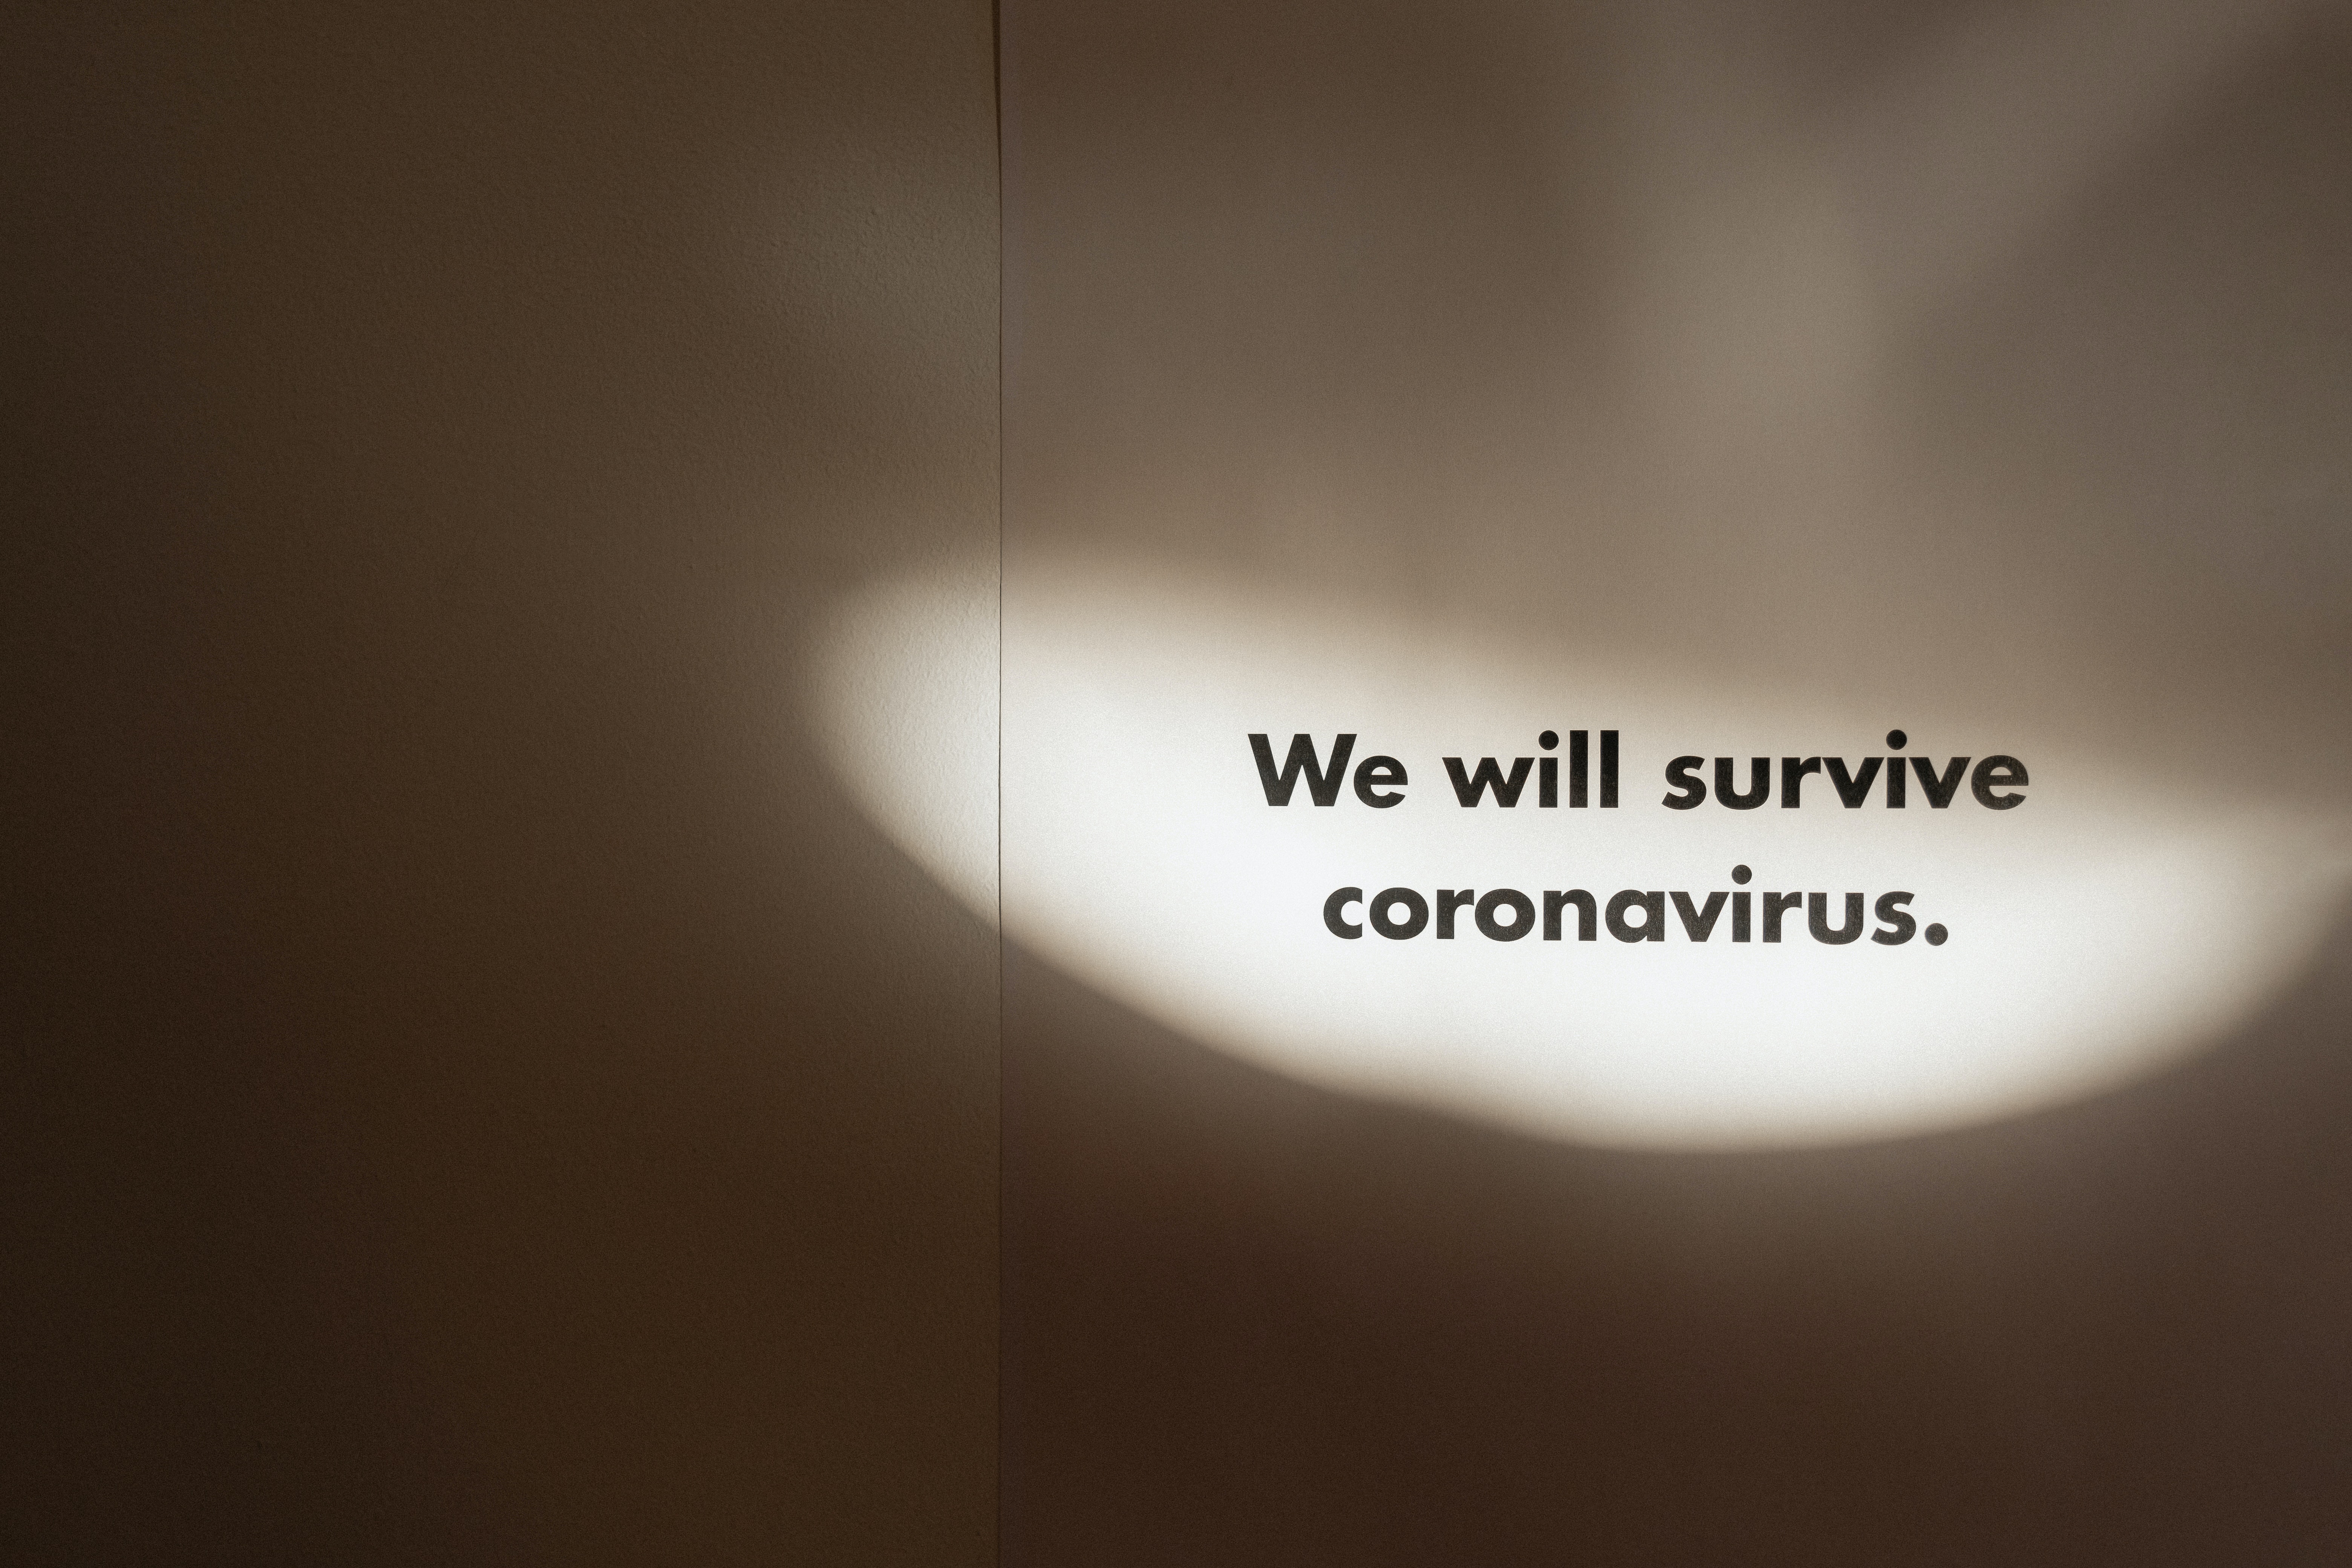 grayscale-photo-of-slogan-on-coronavirus-4108271.jpg